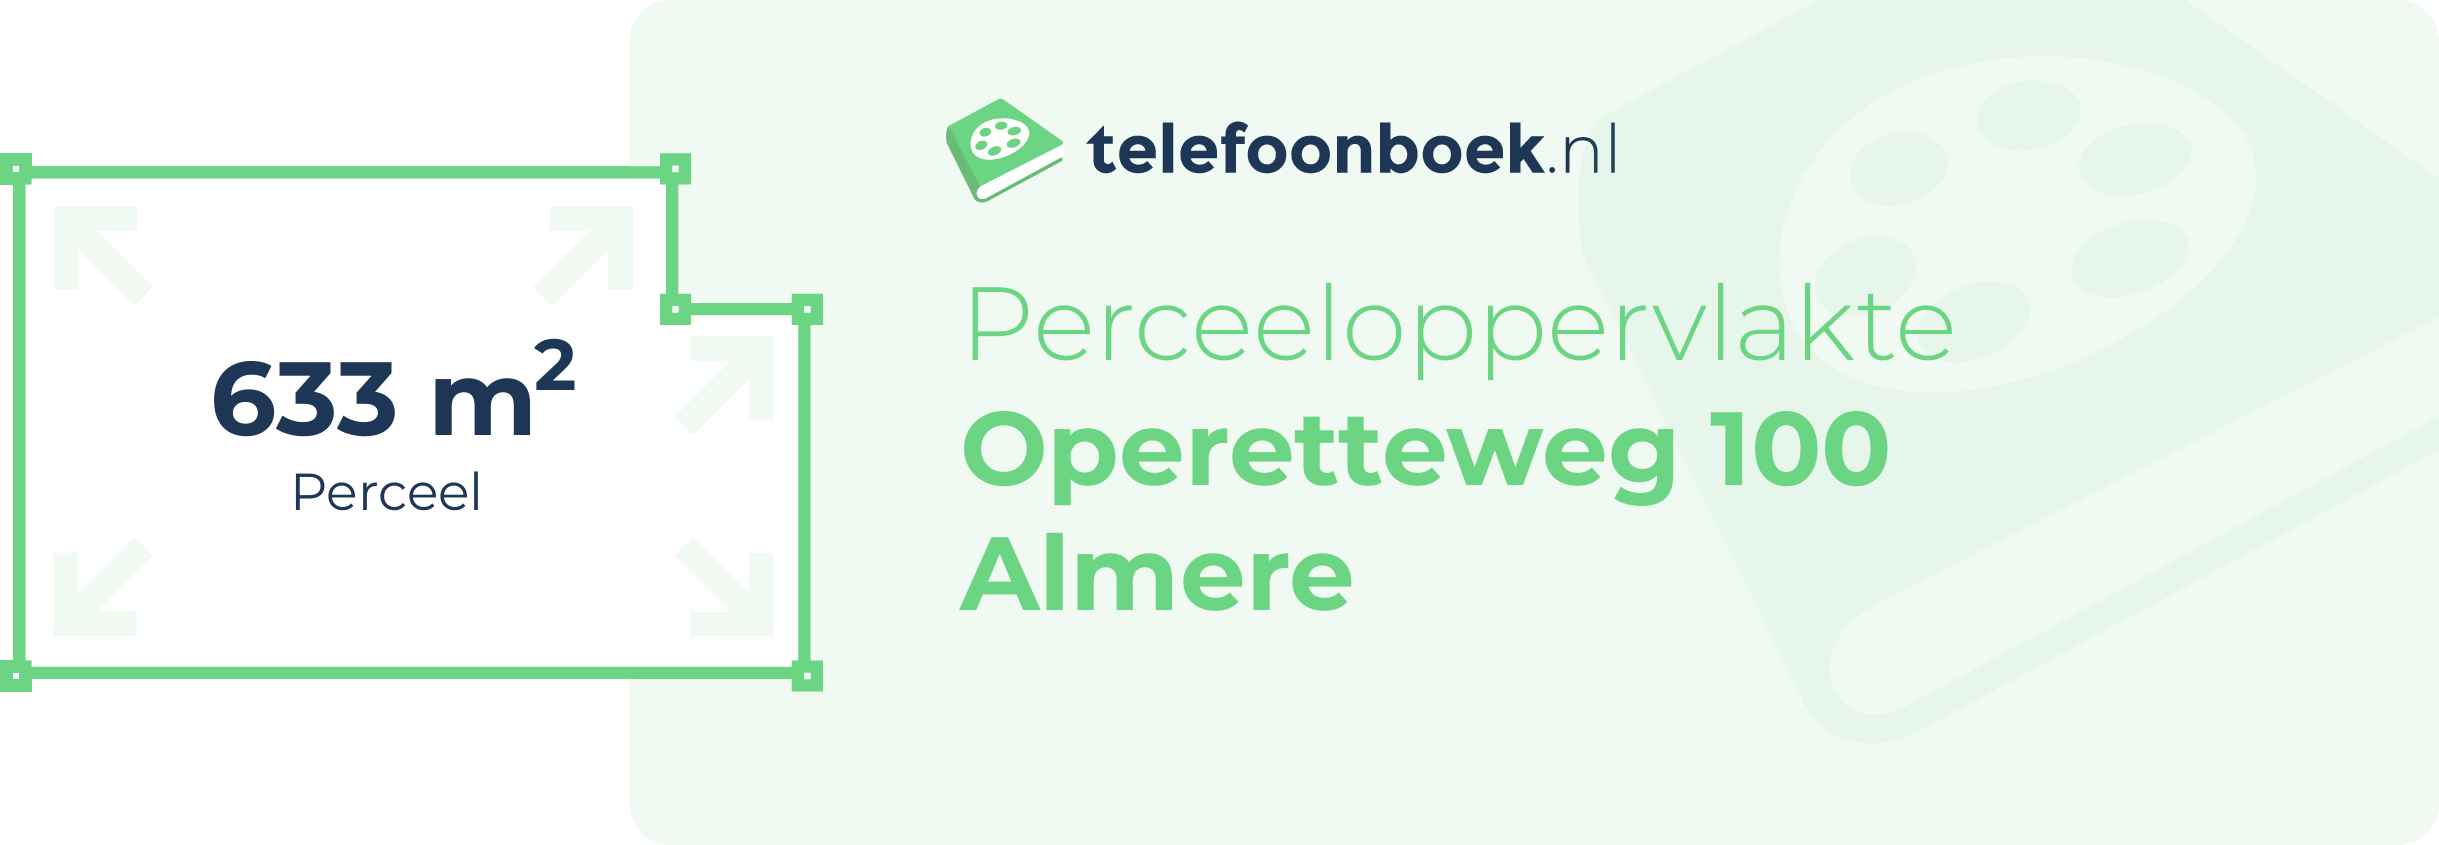 Perceeloppervlakte Operetteweg 100 Almere